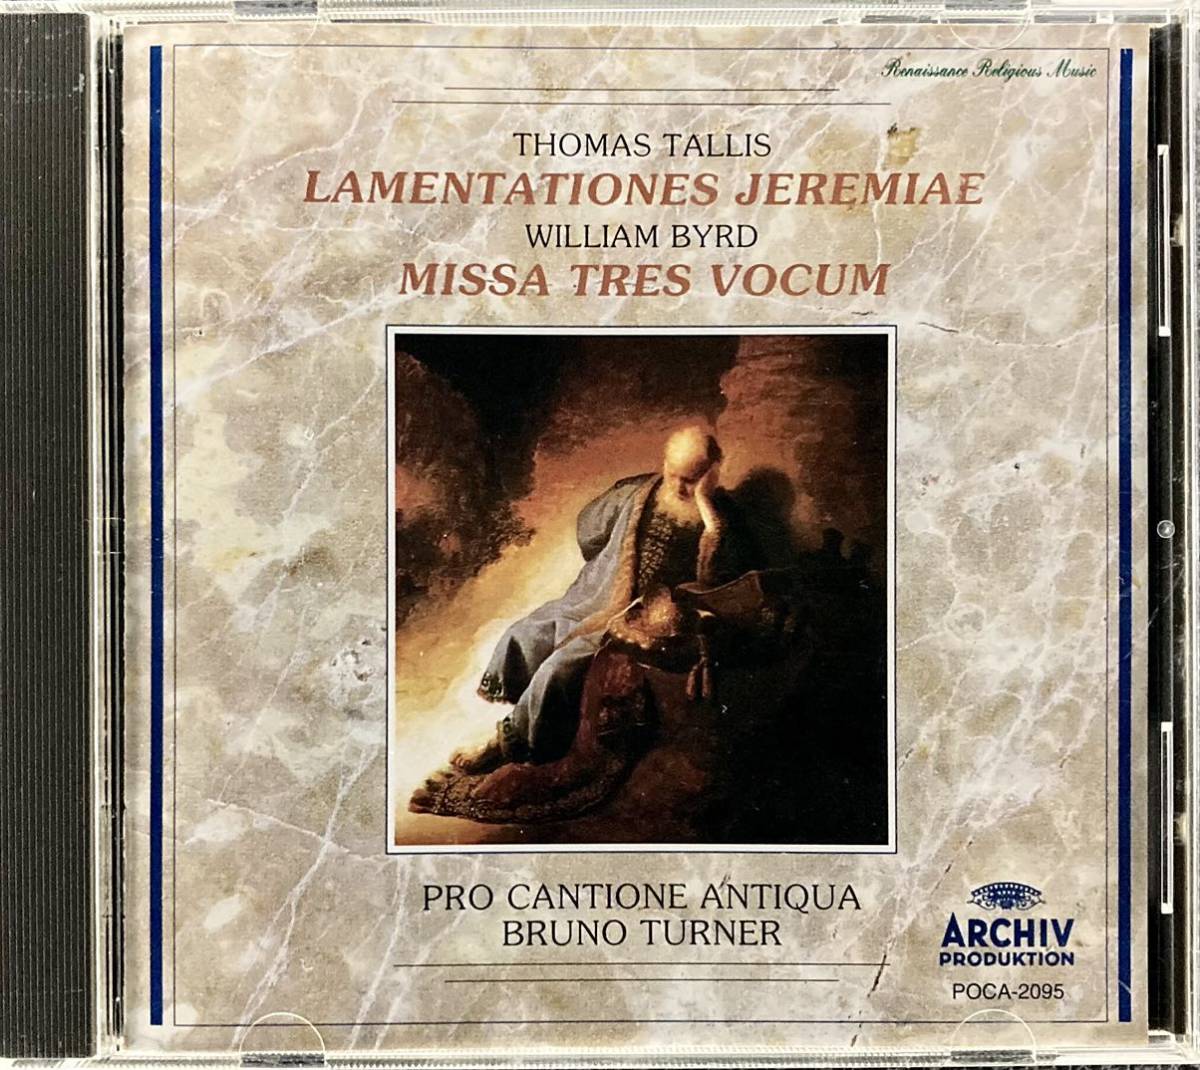 CD/ タリス：エレミアの哀歌、バード：３声部のミサ曲 / ターナー&プロ・カンティオーネ・アンティクワ / サンプル盤_画像1